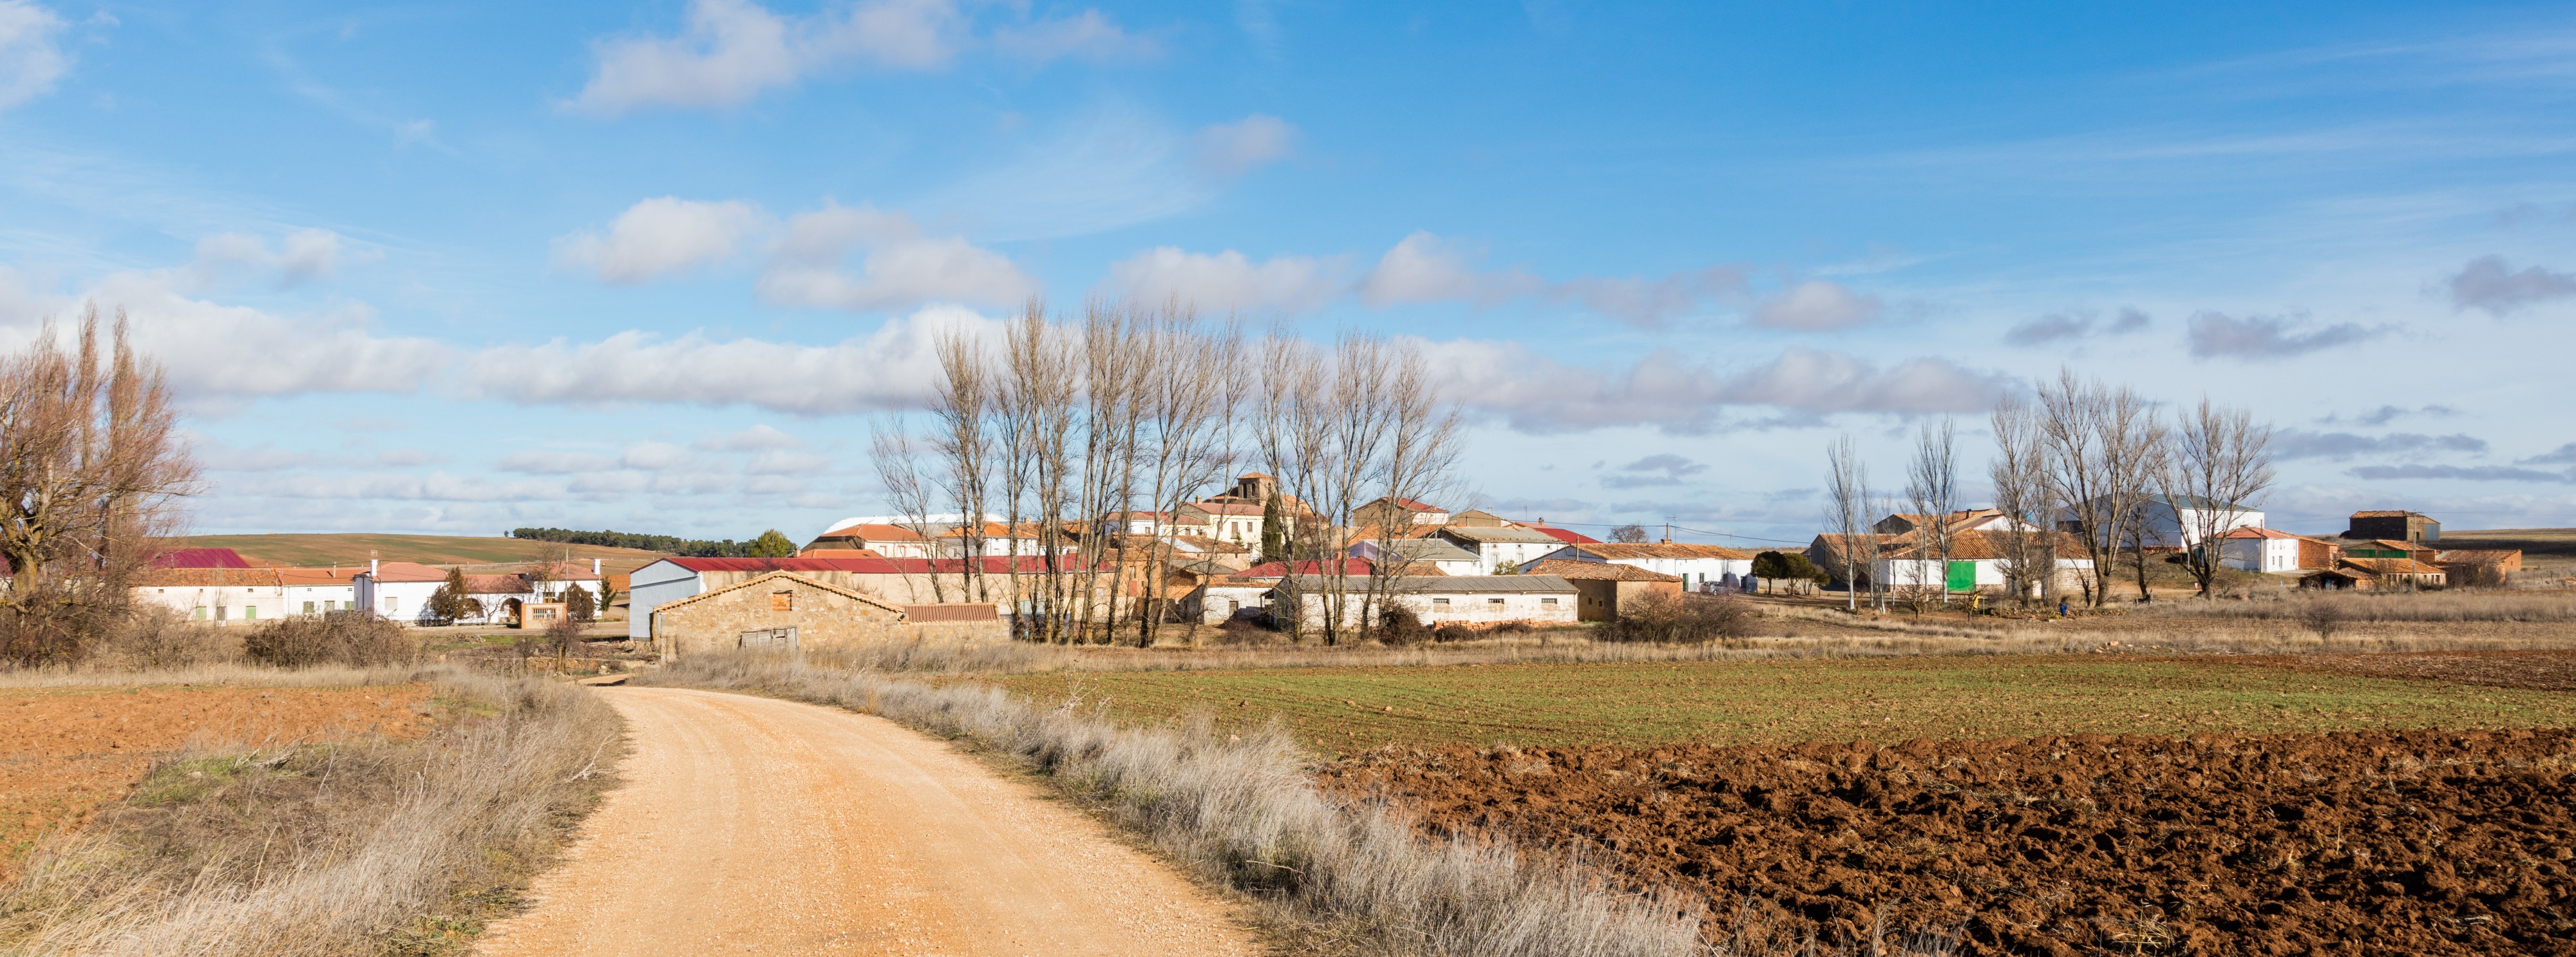 Borjabad, Soria, España, 2015-12-29, DD 47